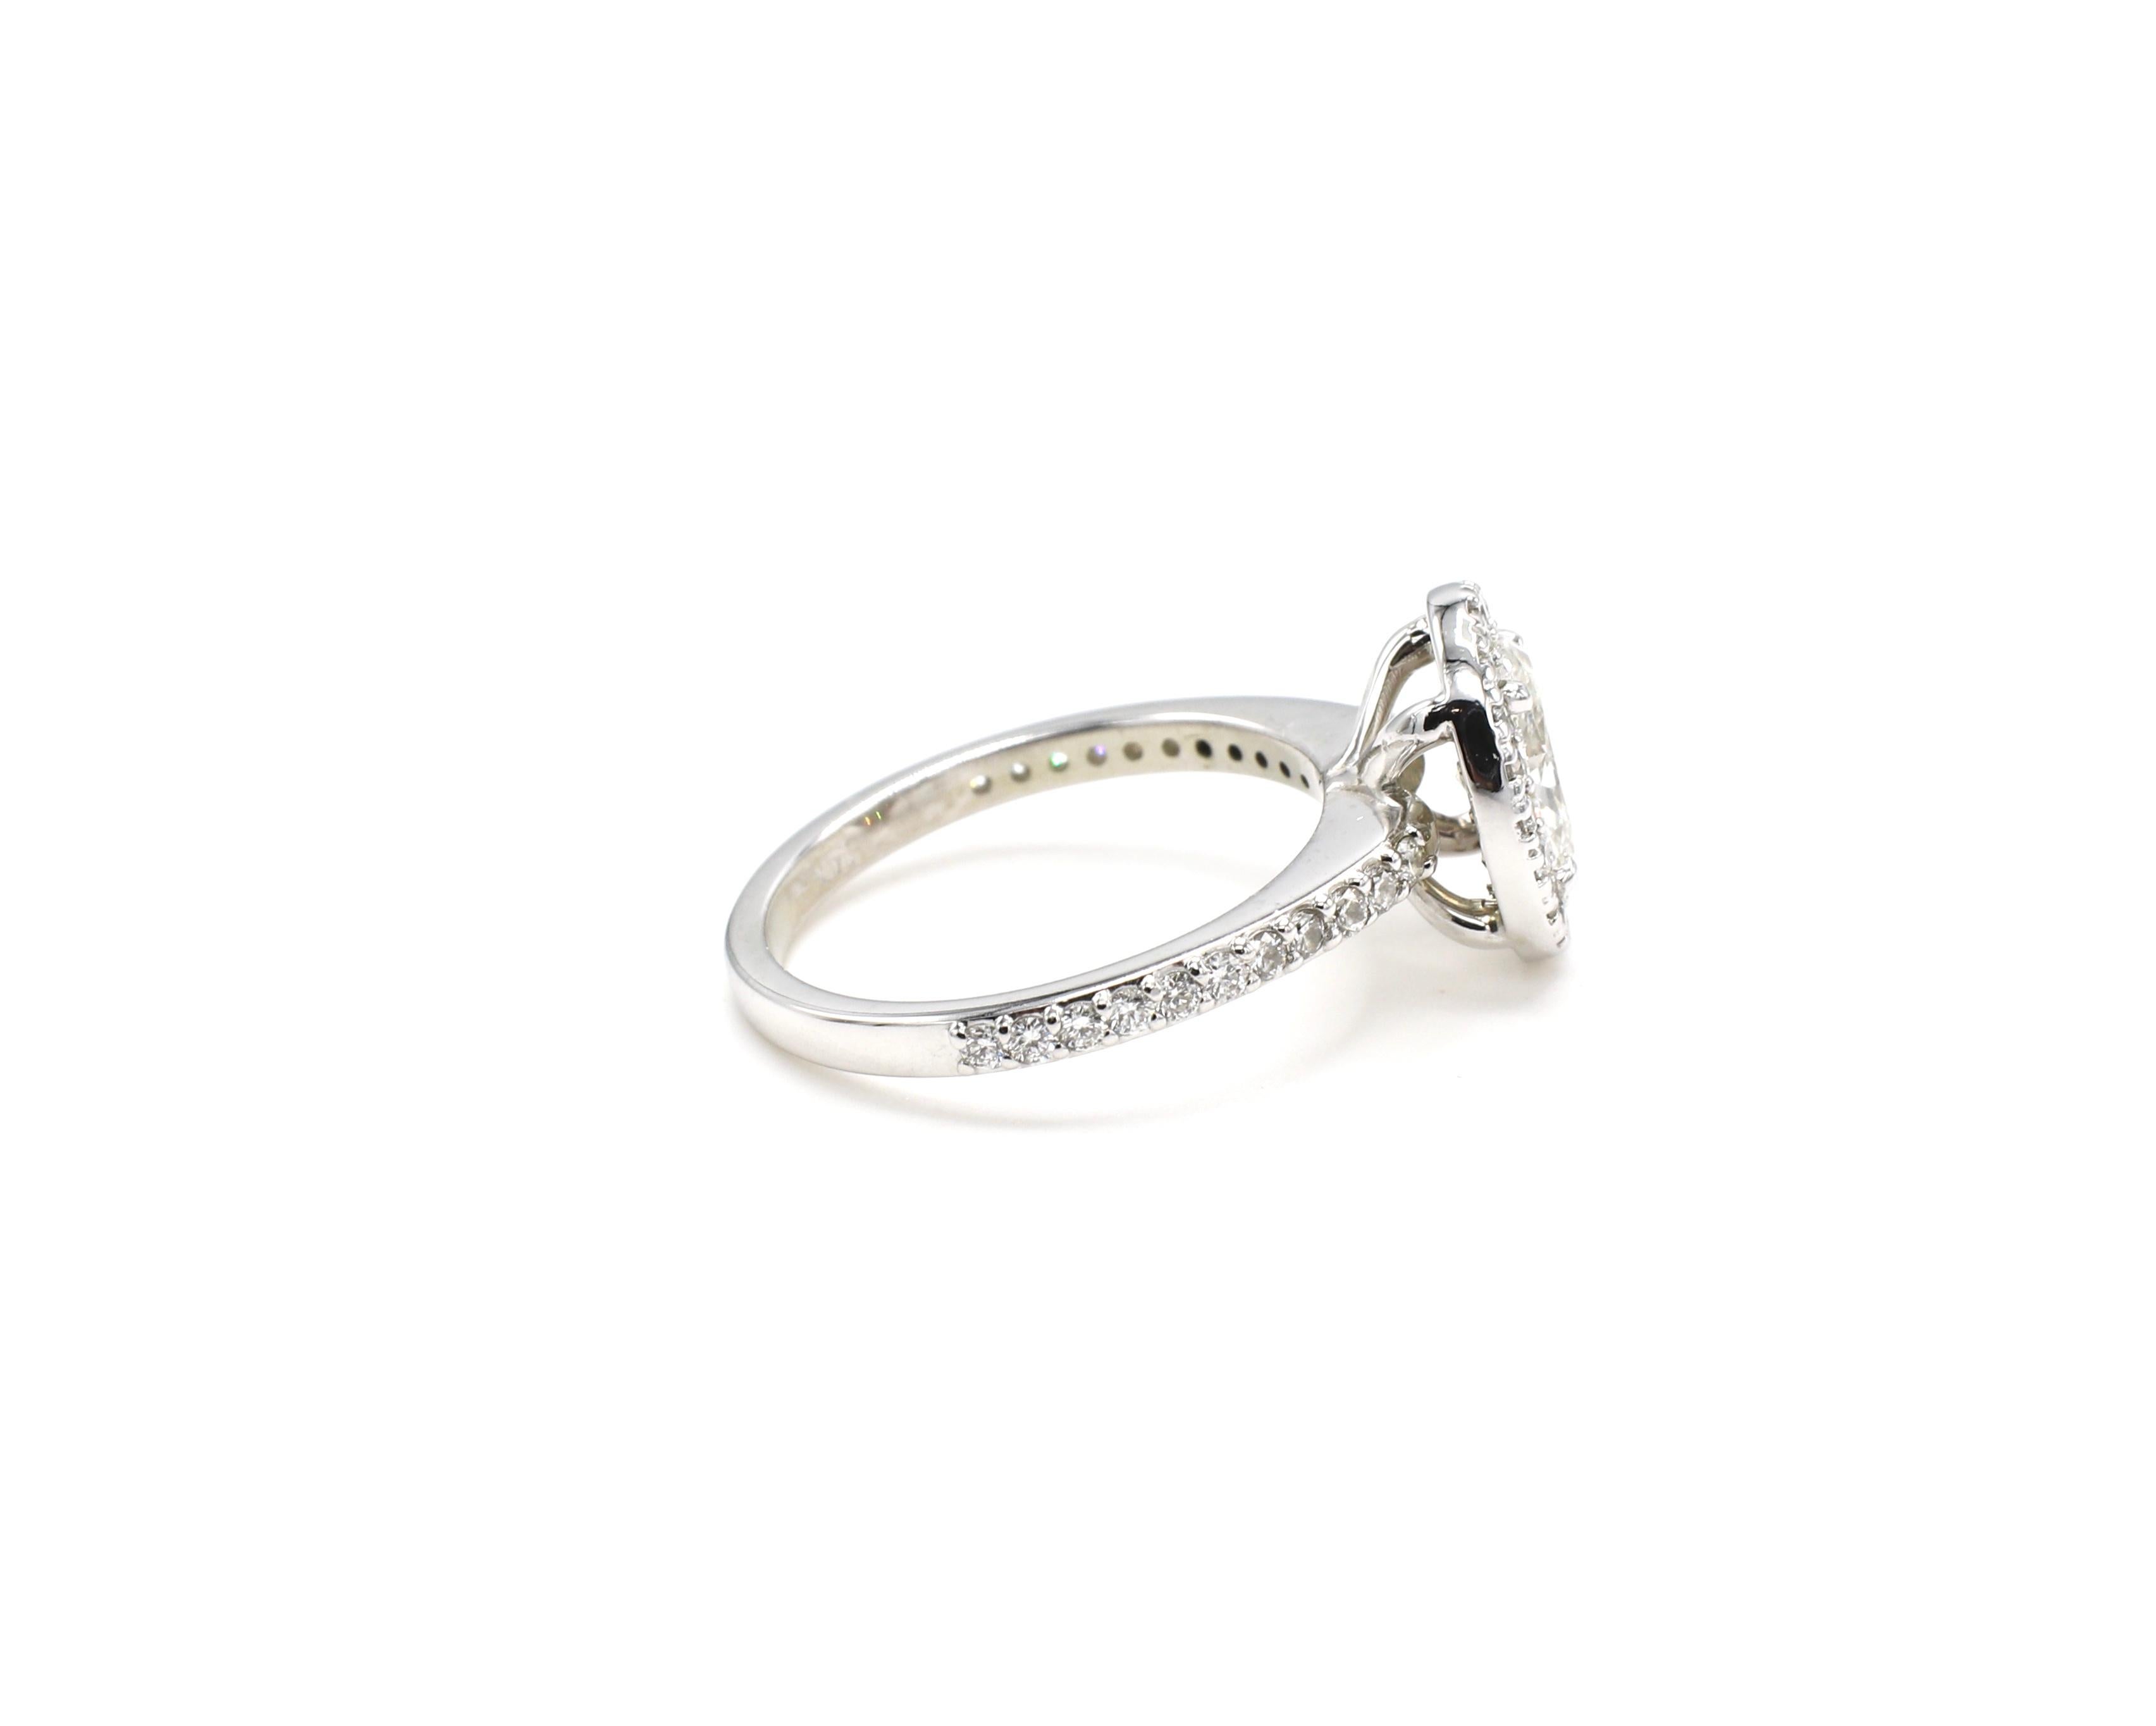 0.73 carat diamond ring